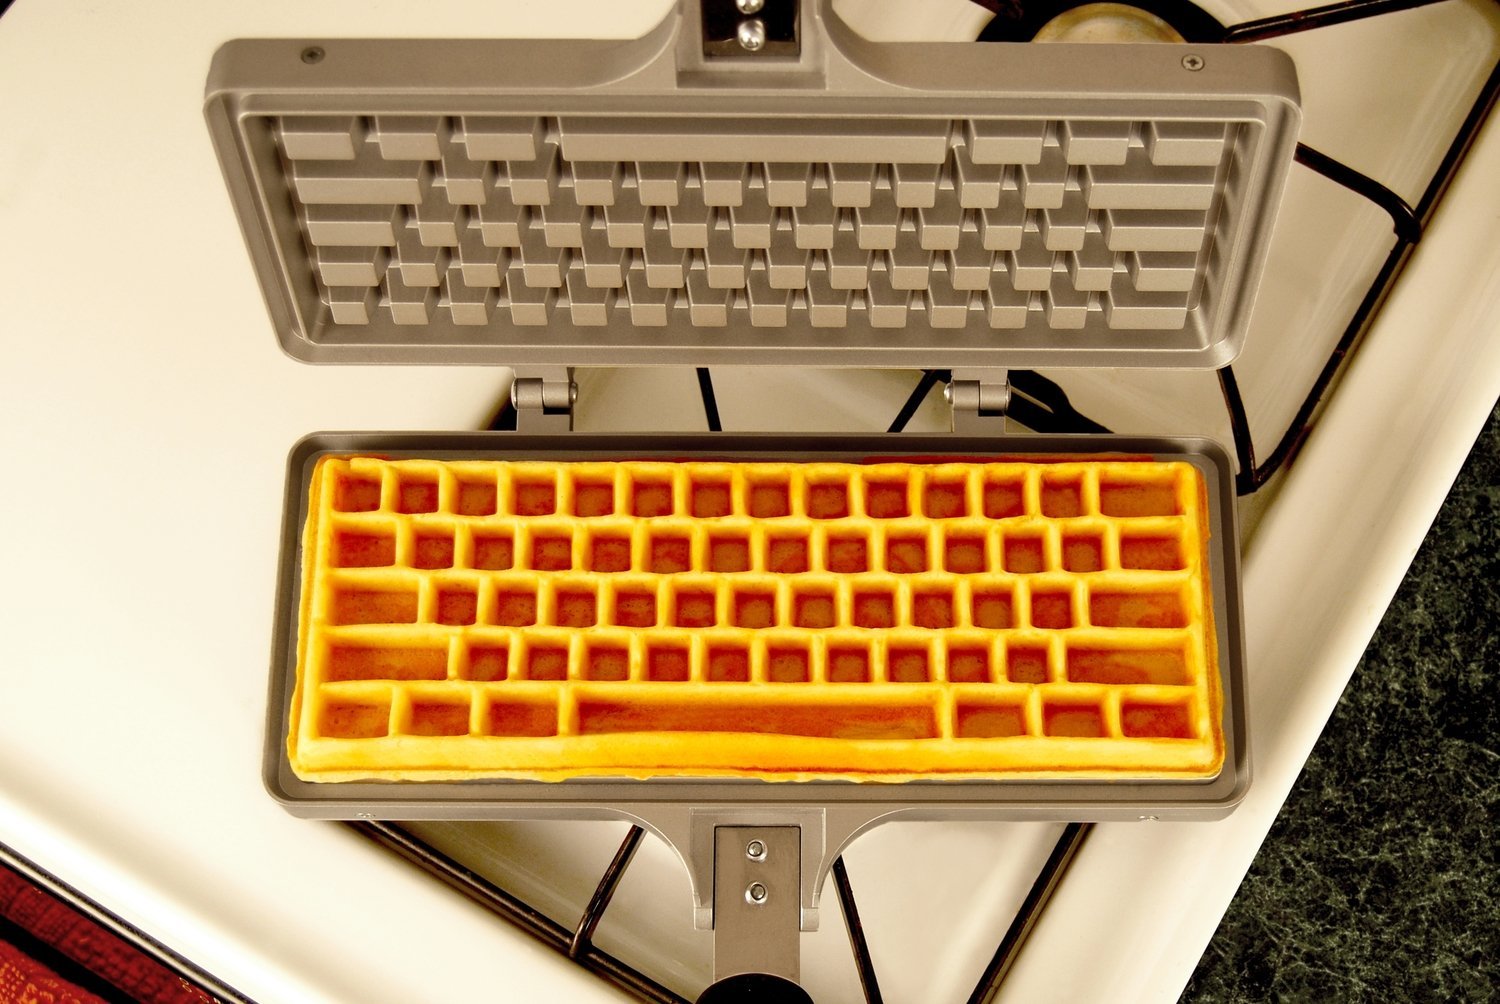 The Keyboard Waffle Iron with waffle